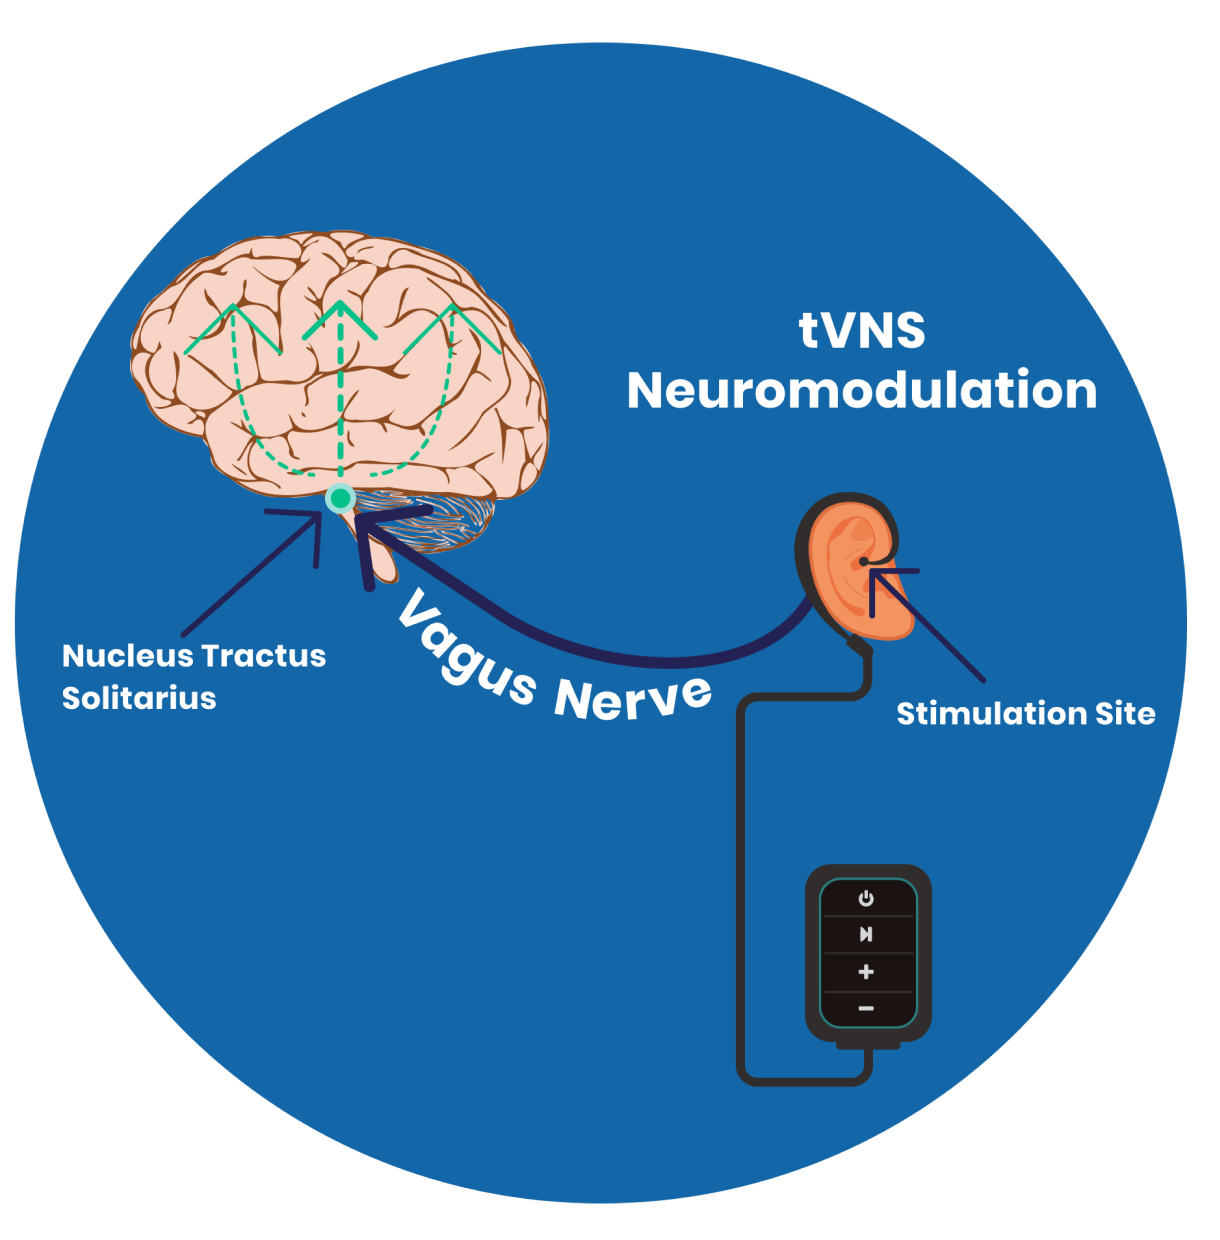 The Neural Mechanisms of Transcutaneous Vagus Nerve Stimulation (tVNS)